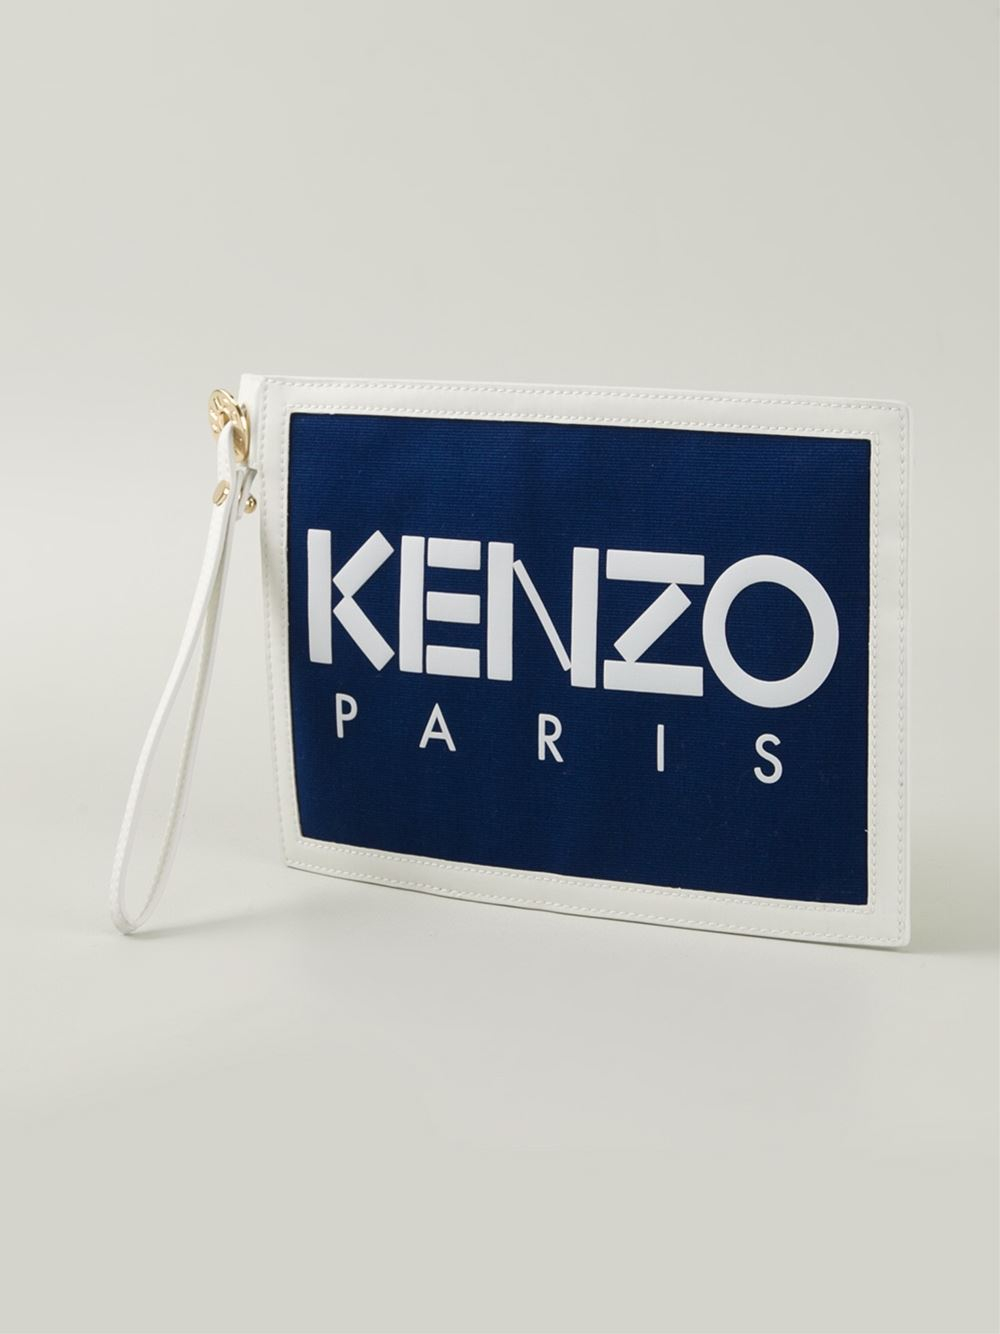 KENZO ' Paris' Clutch in Blue - Lyst